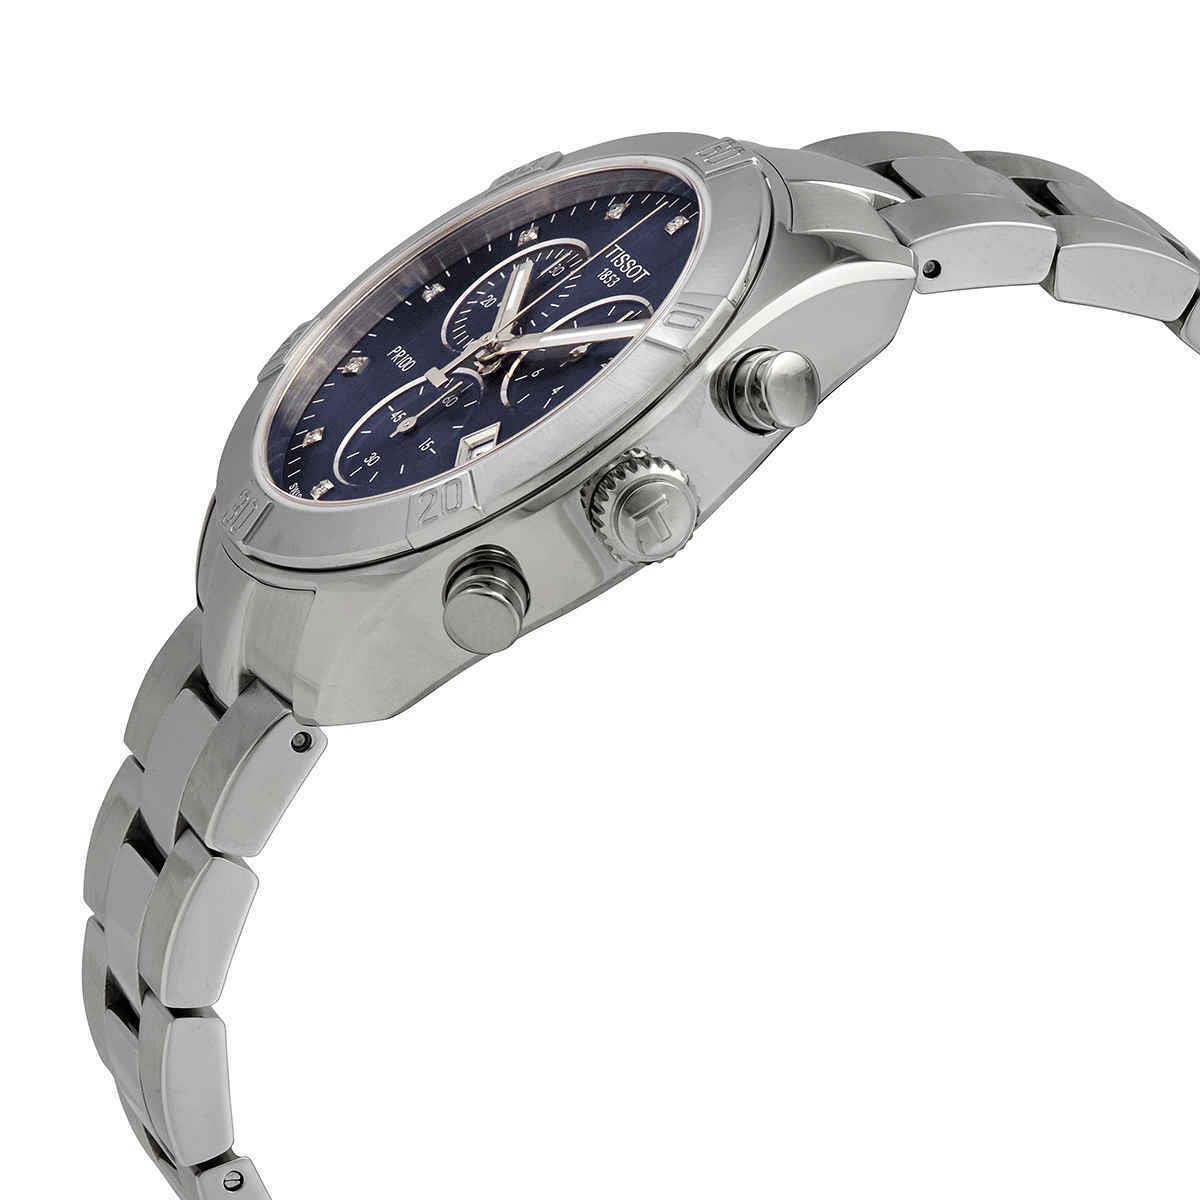 Tissot T-classic Chronograph Diamond Blue Dial Ladies Watch T101.917.11.046.00